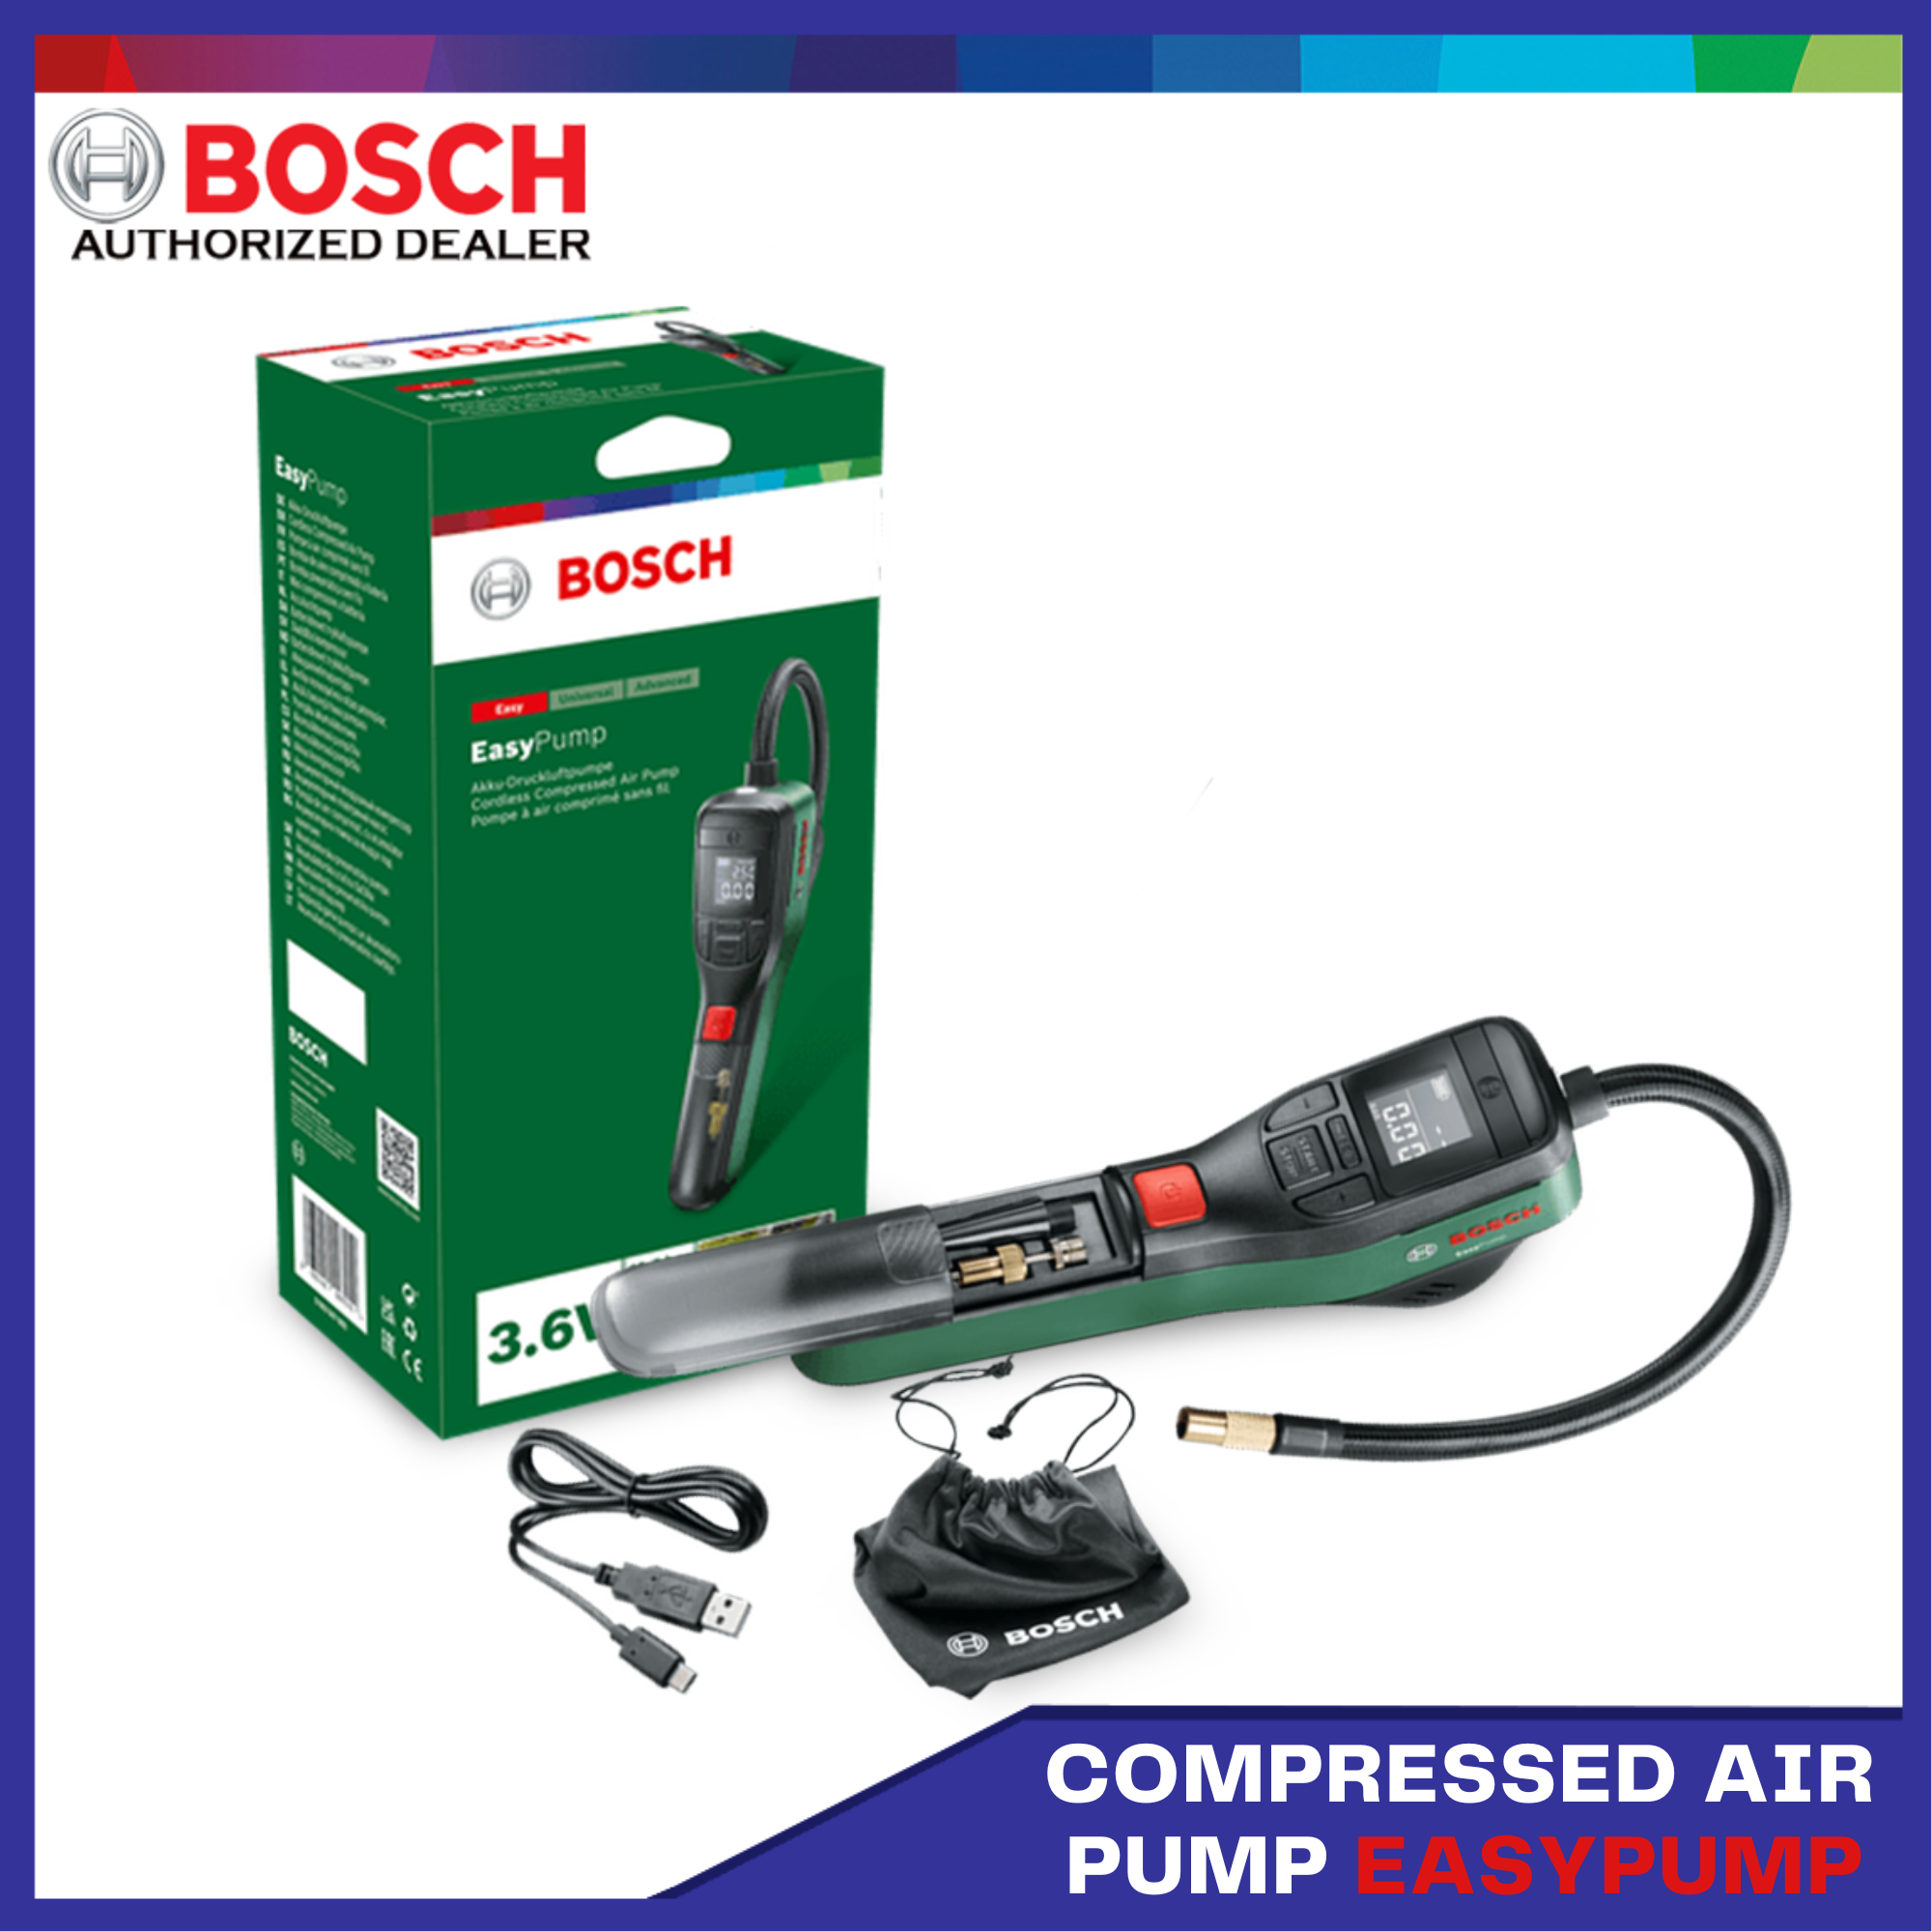 Bosch Easy Pump - Portable battery-powered air compressor - 3.6 V - 3 Ah